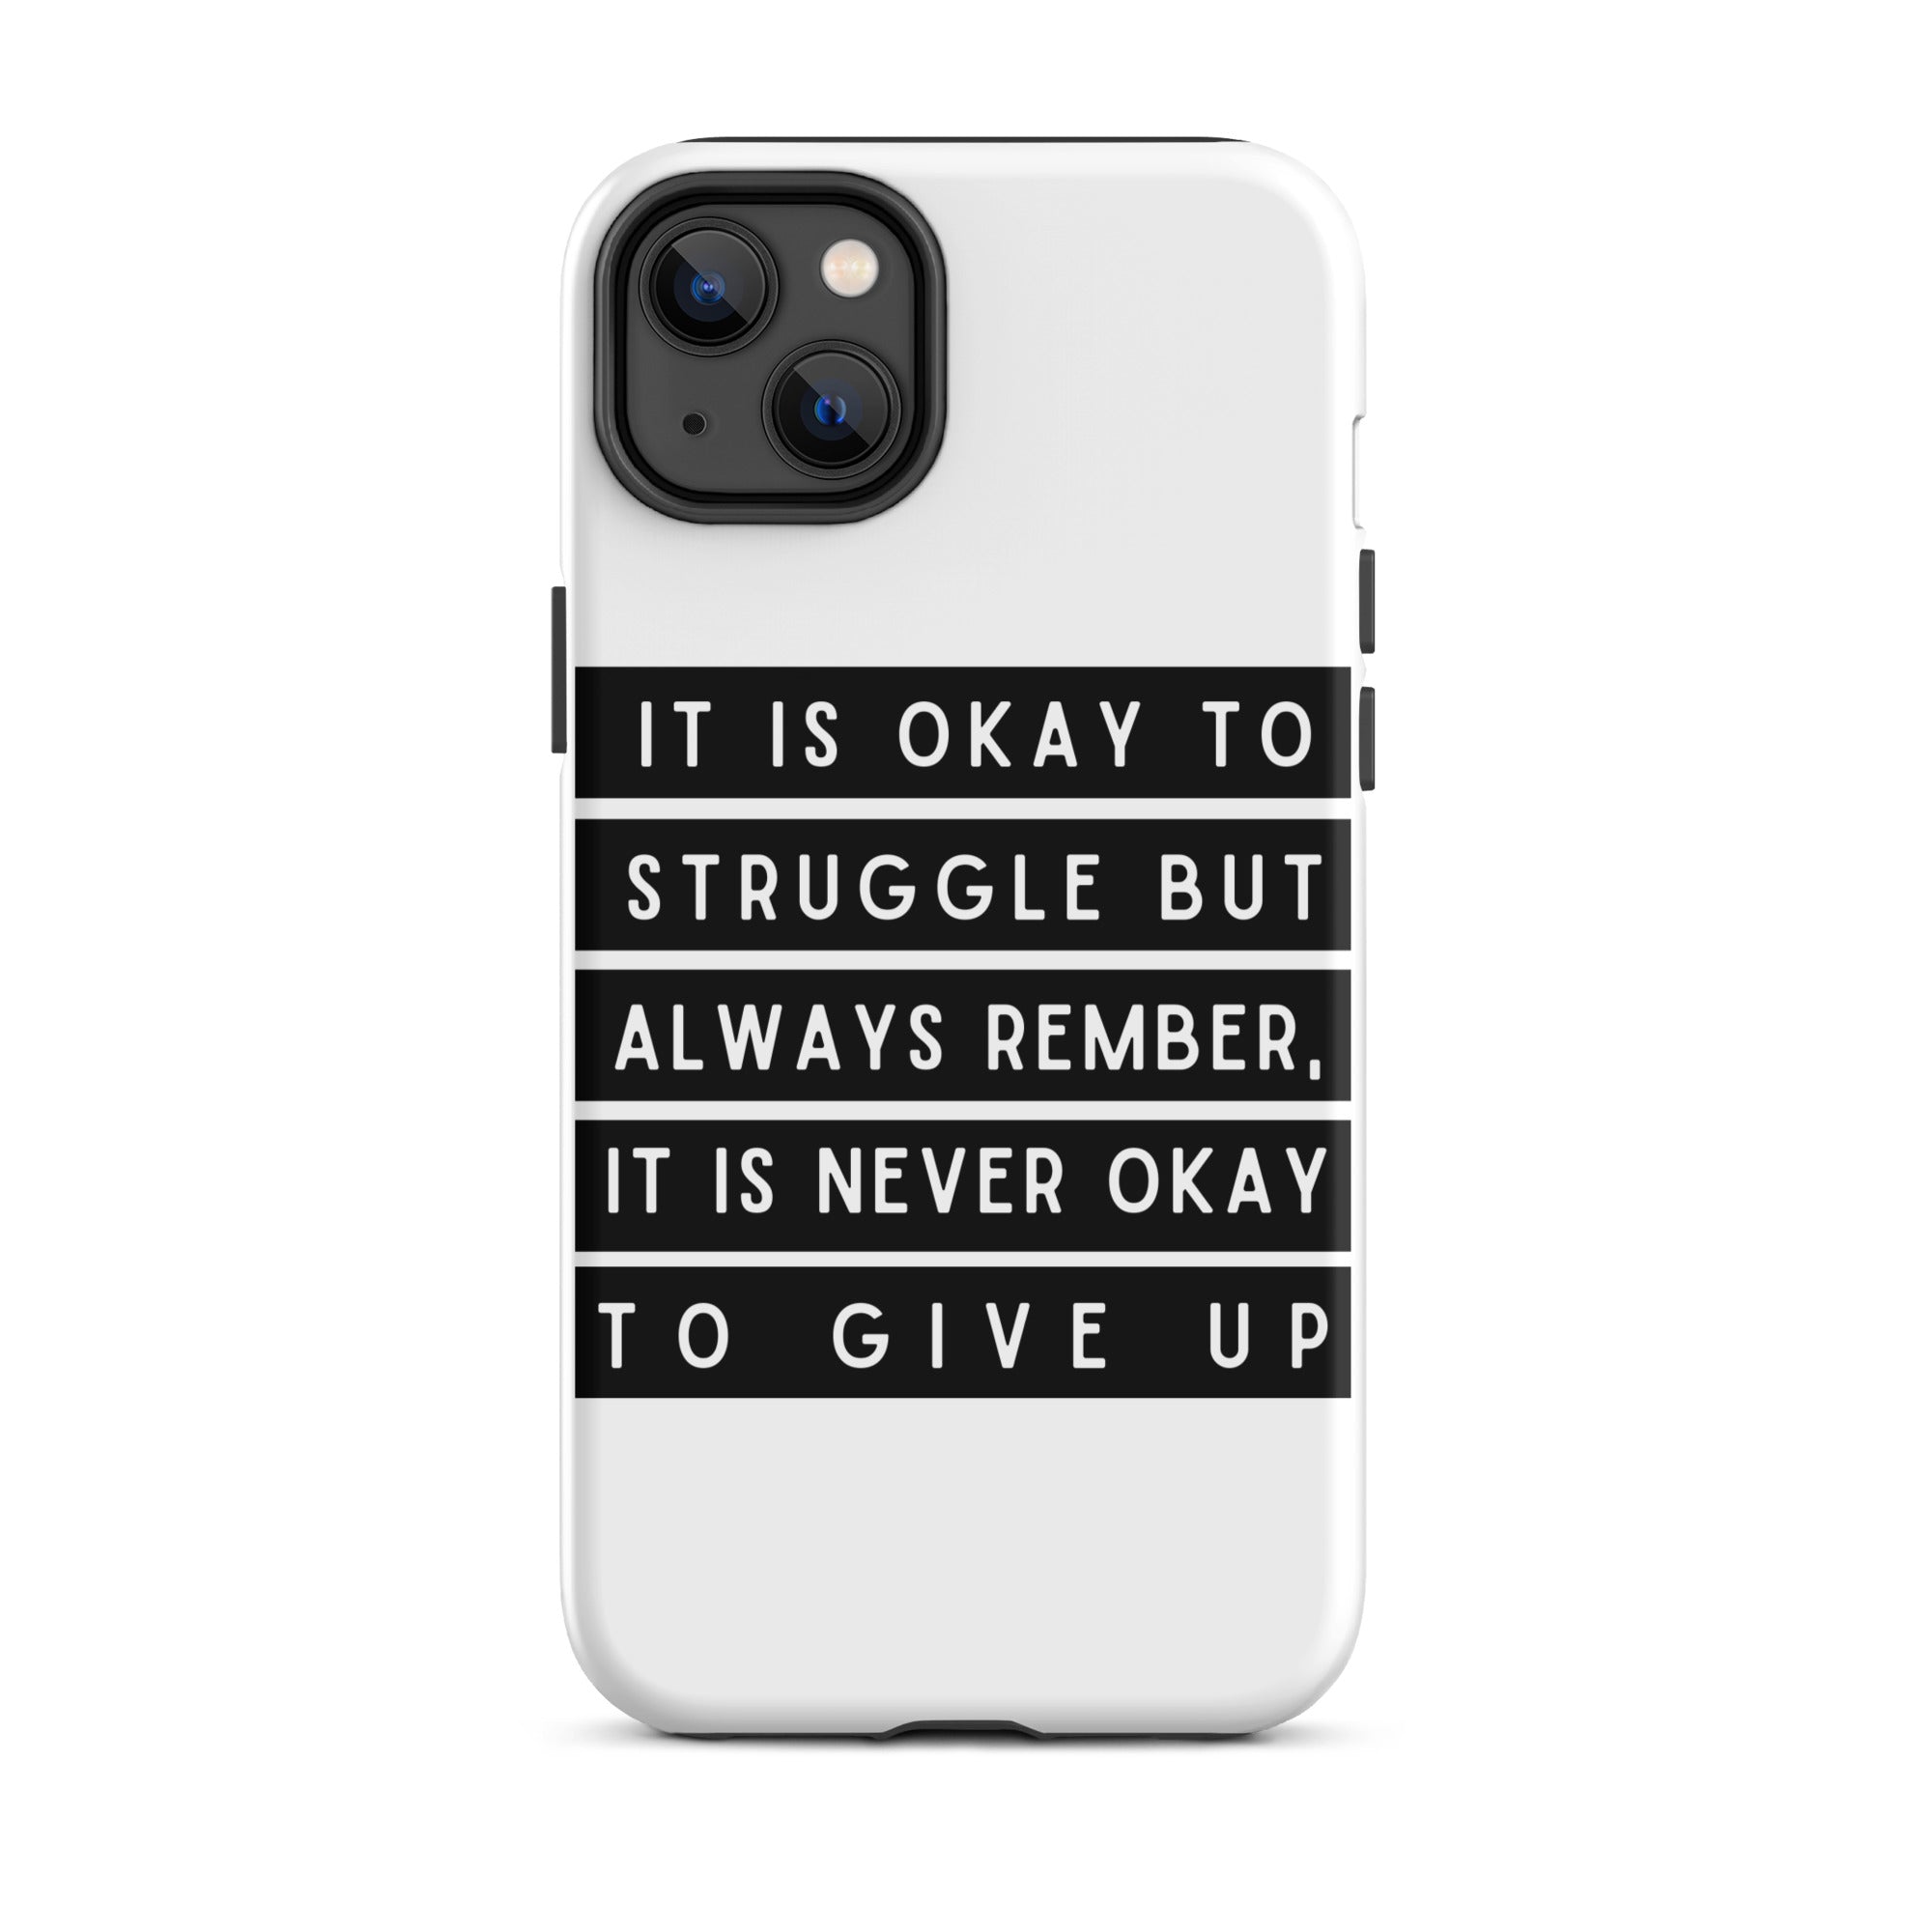 It's Okay To Struggle - Tough iPhone case